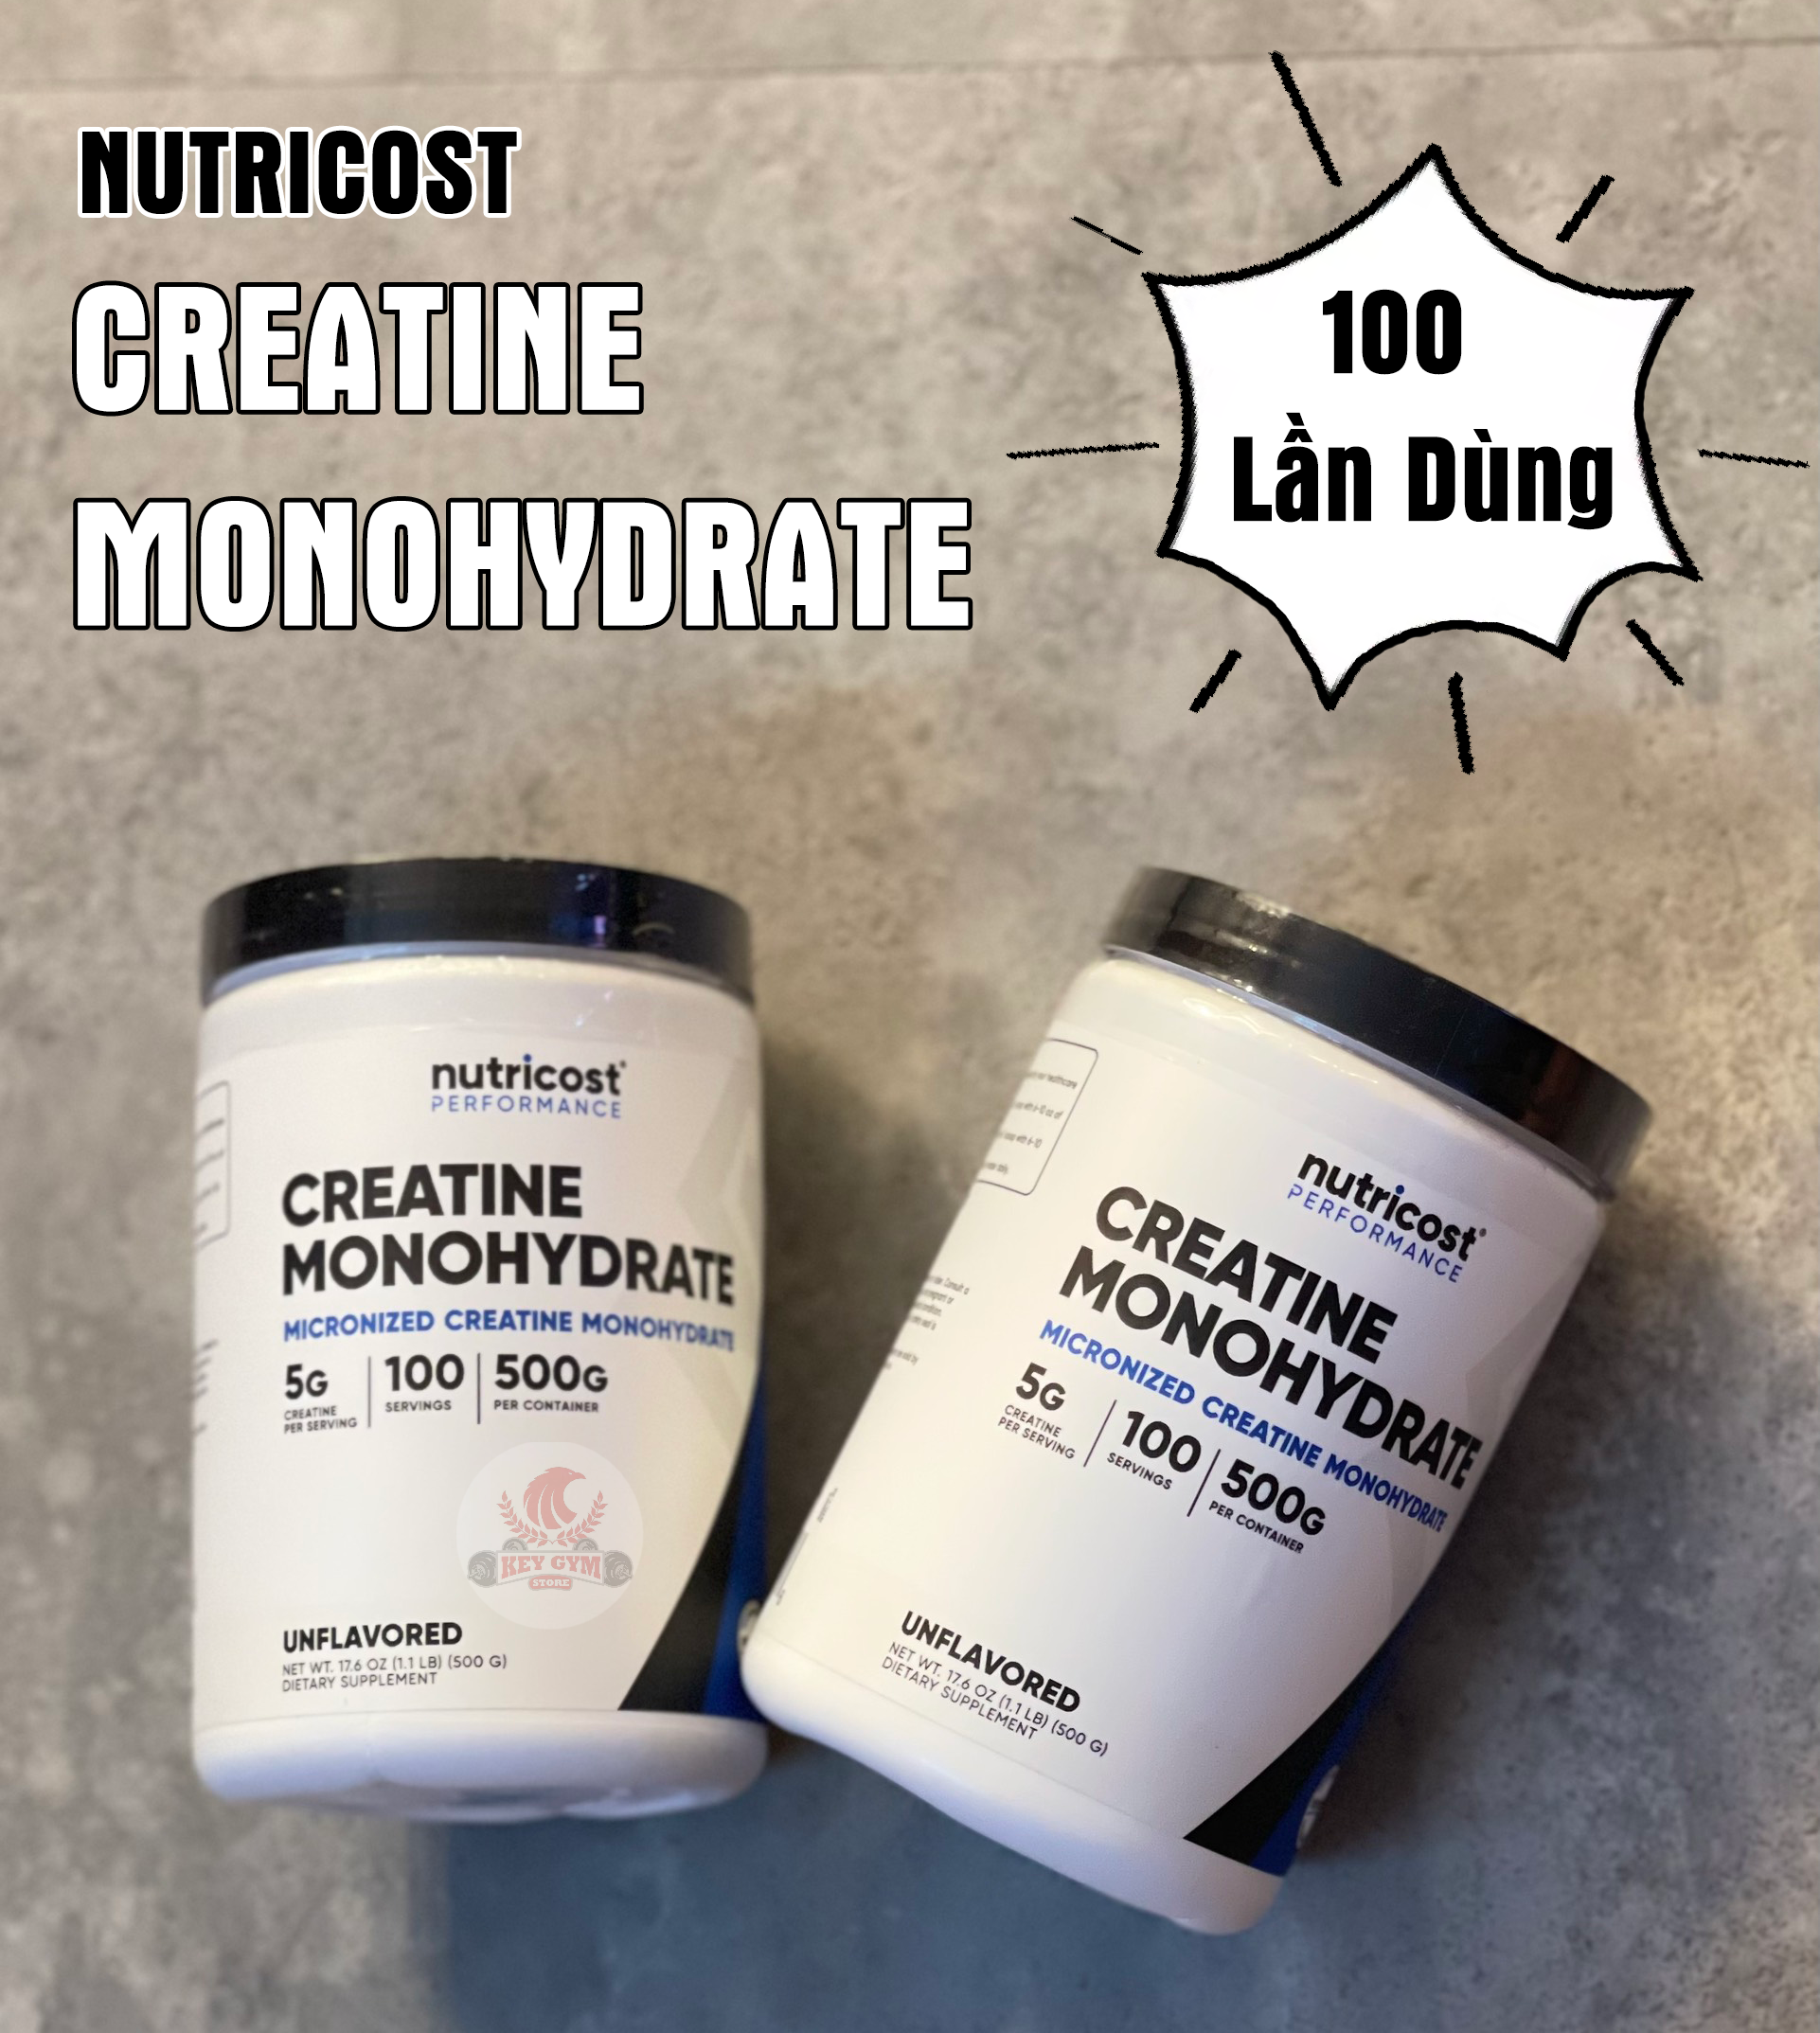 Nutricost Creatine Monohydrate